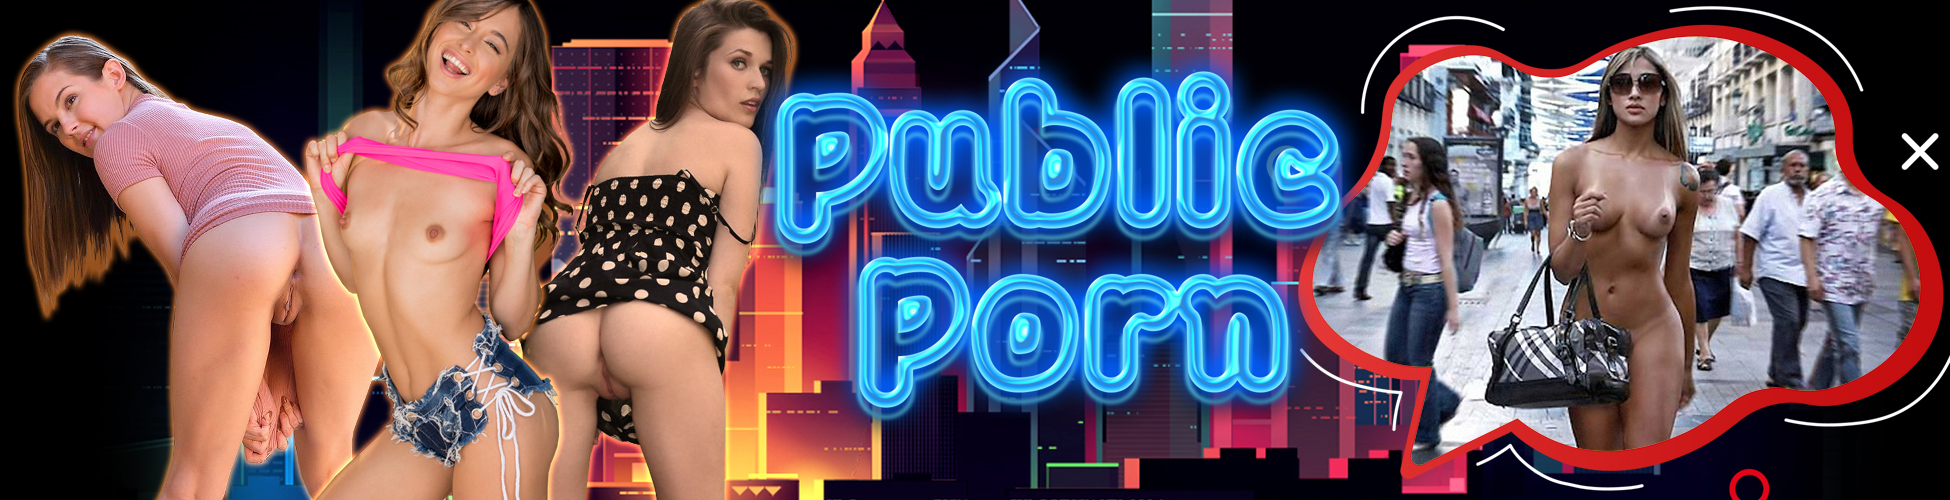 Public Porn